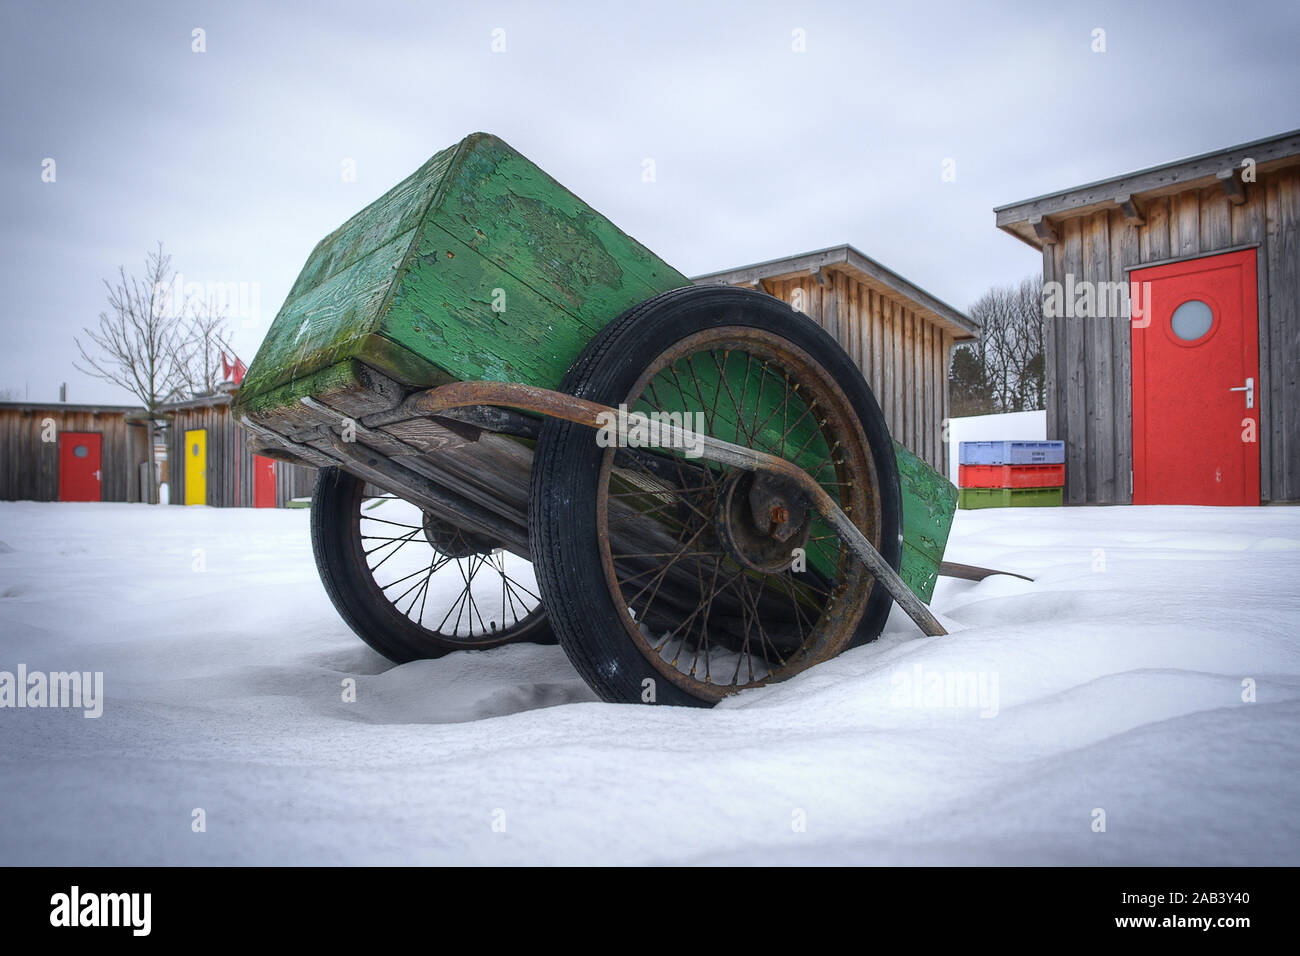 Handwagen Alter im Schnee |vieux trolley dans la neige| Banque D'Images